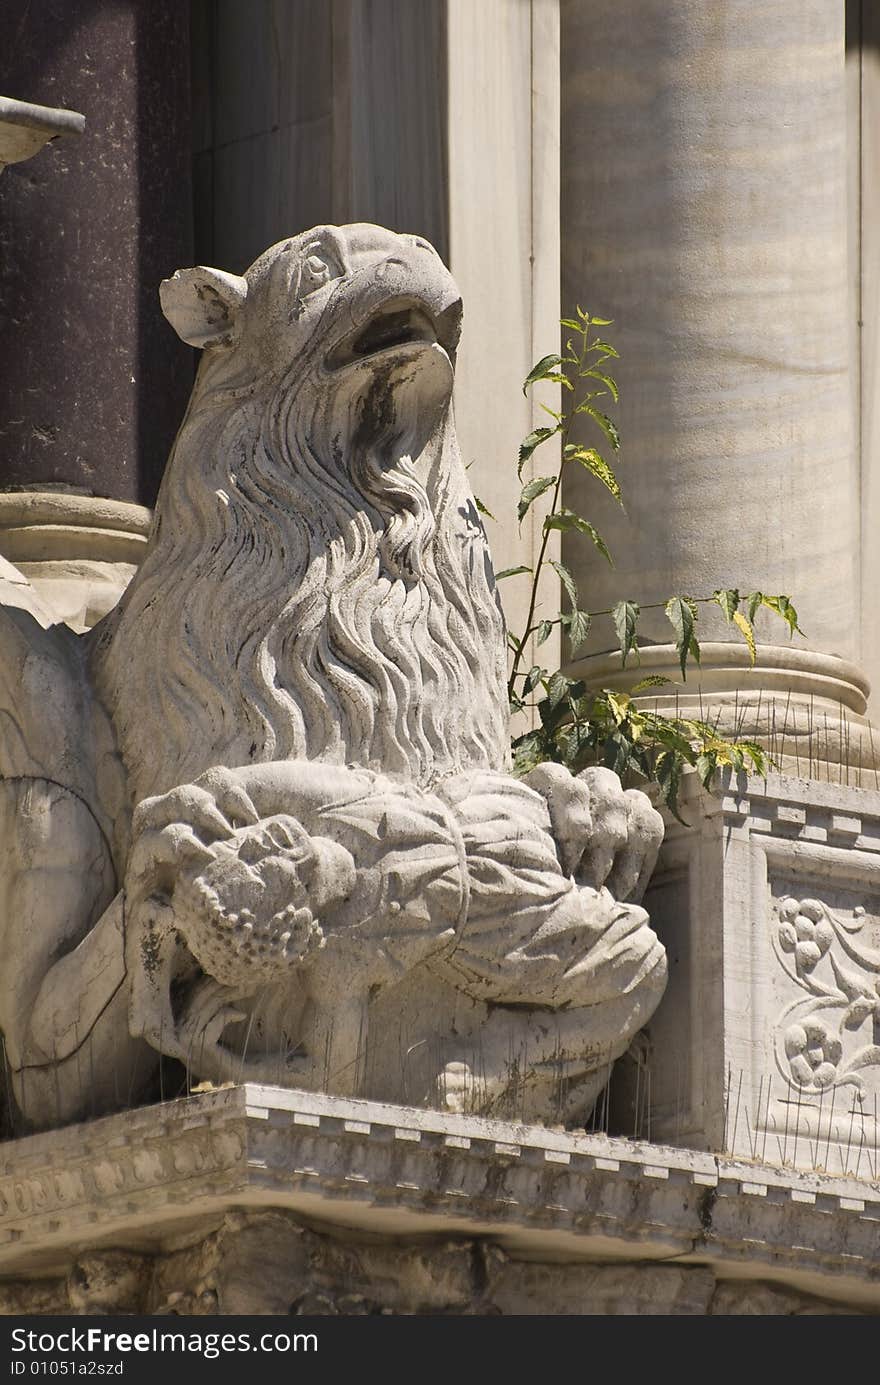 Gargoyle on Side of Basilica di San Marco. Taken in Venice, Italy.